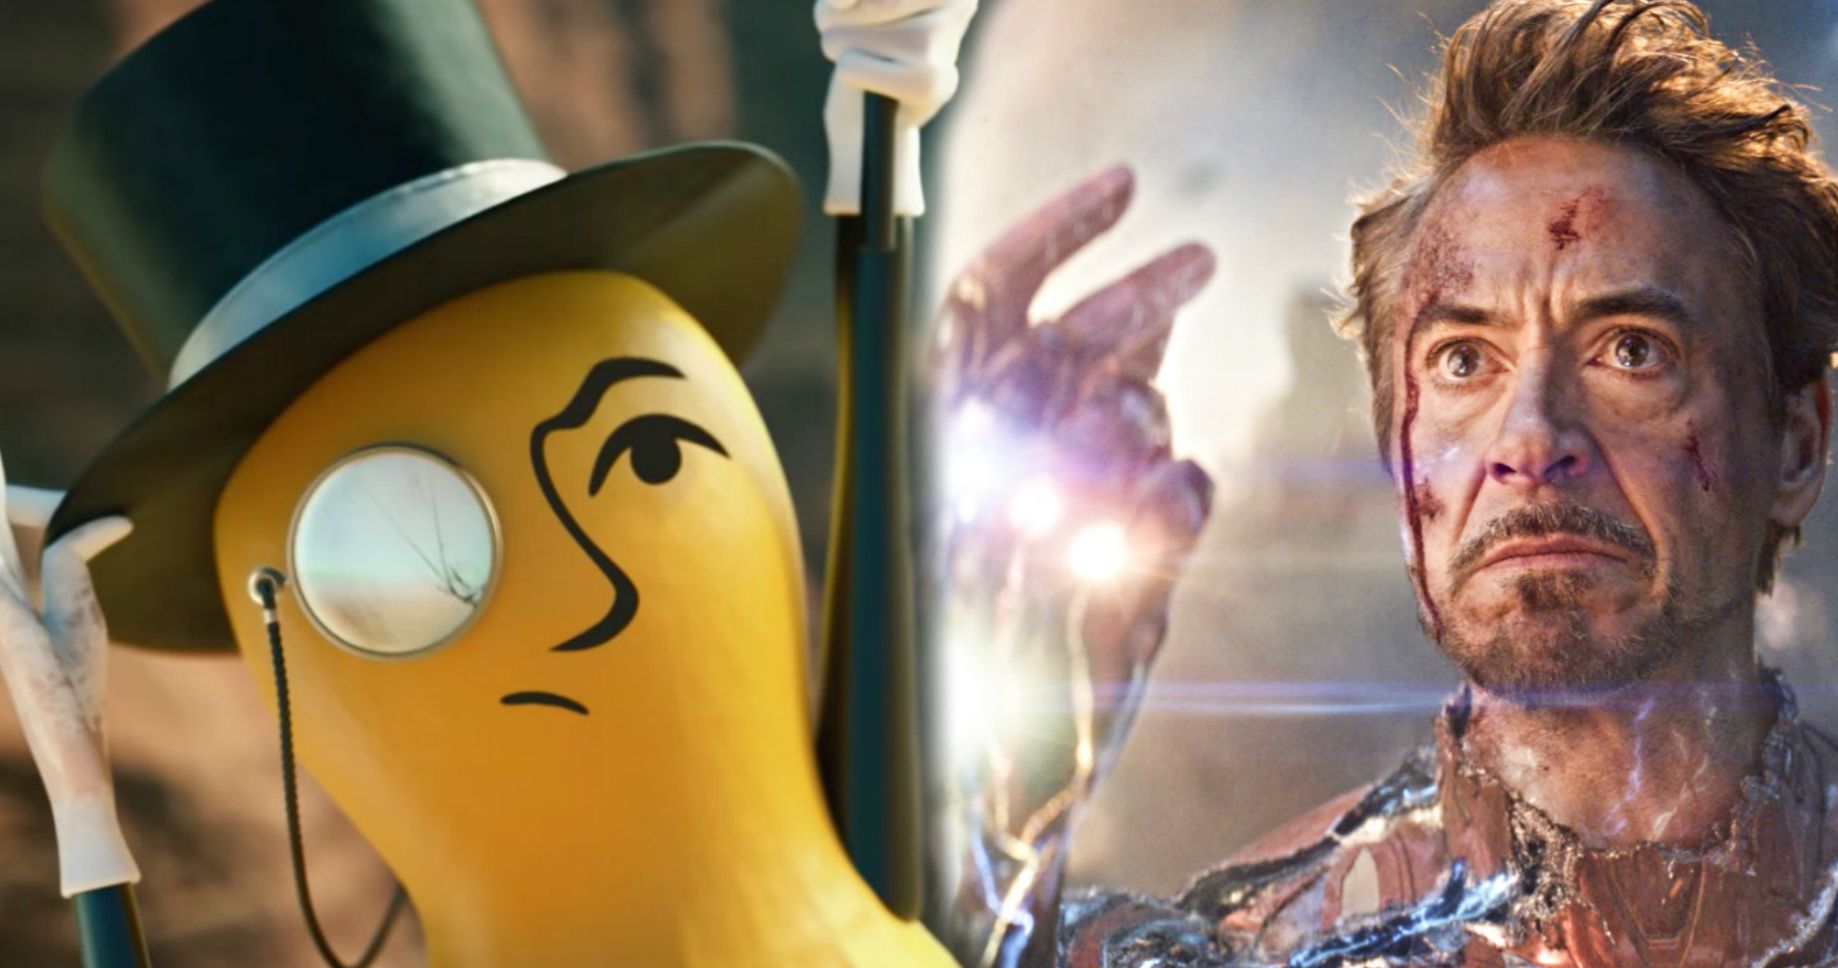 Avengers: Endgame Inspired Mr. Peanut's Death in Planters' Super Bowl Commercial